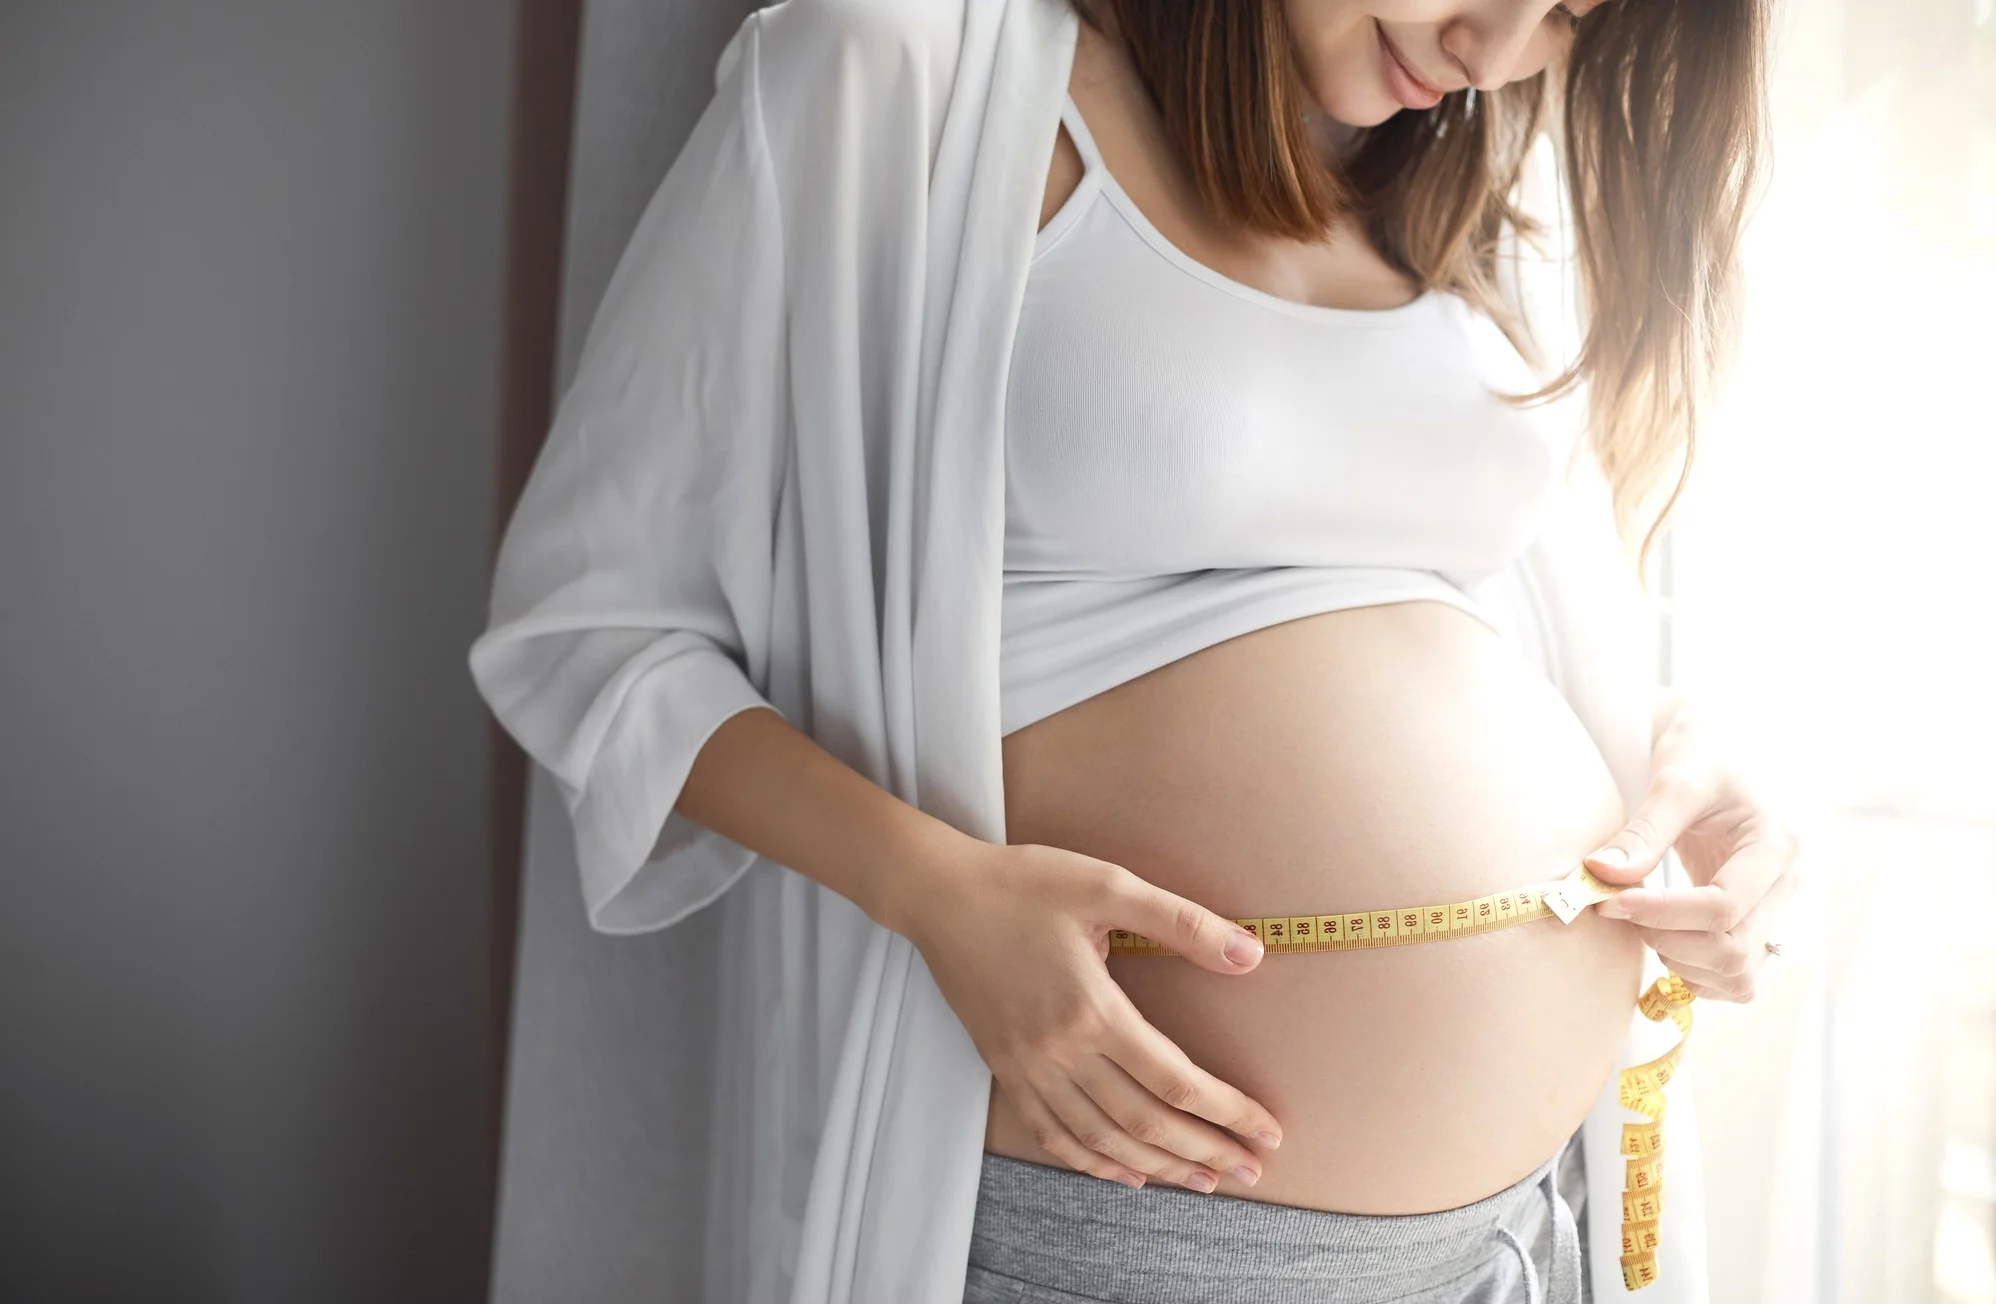 Changements corporels pendant la grossesse